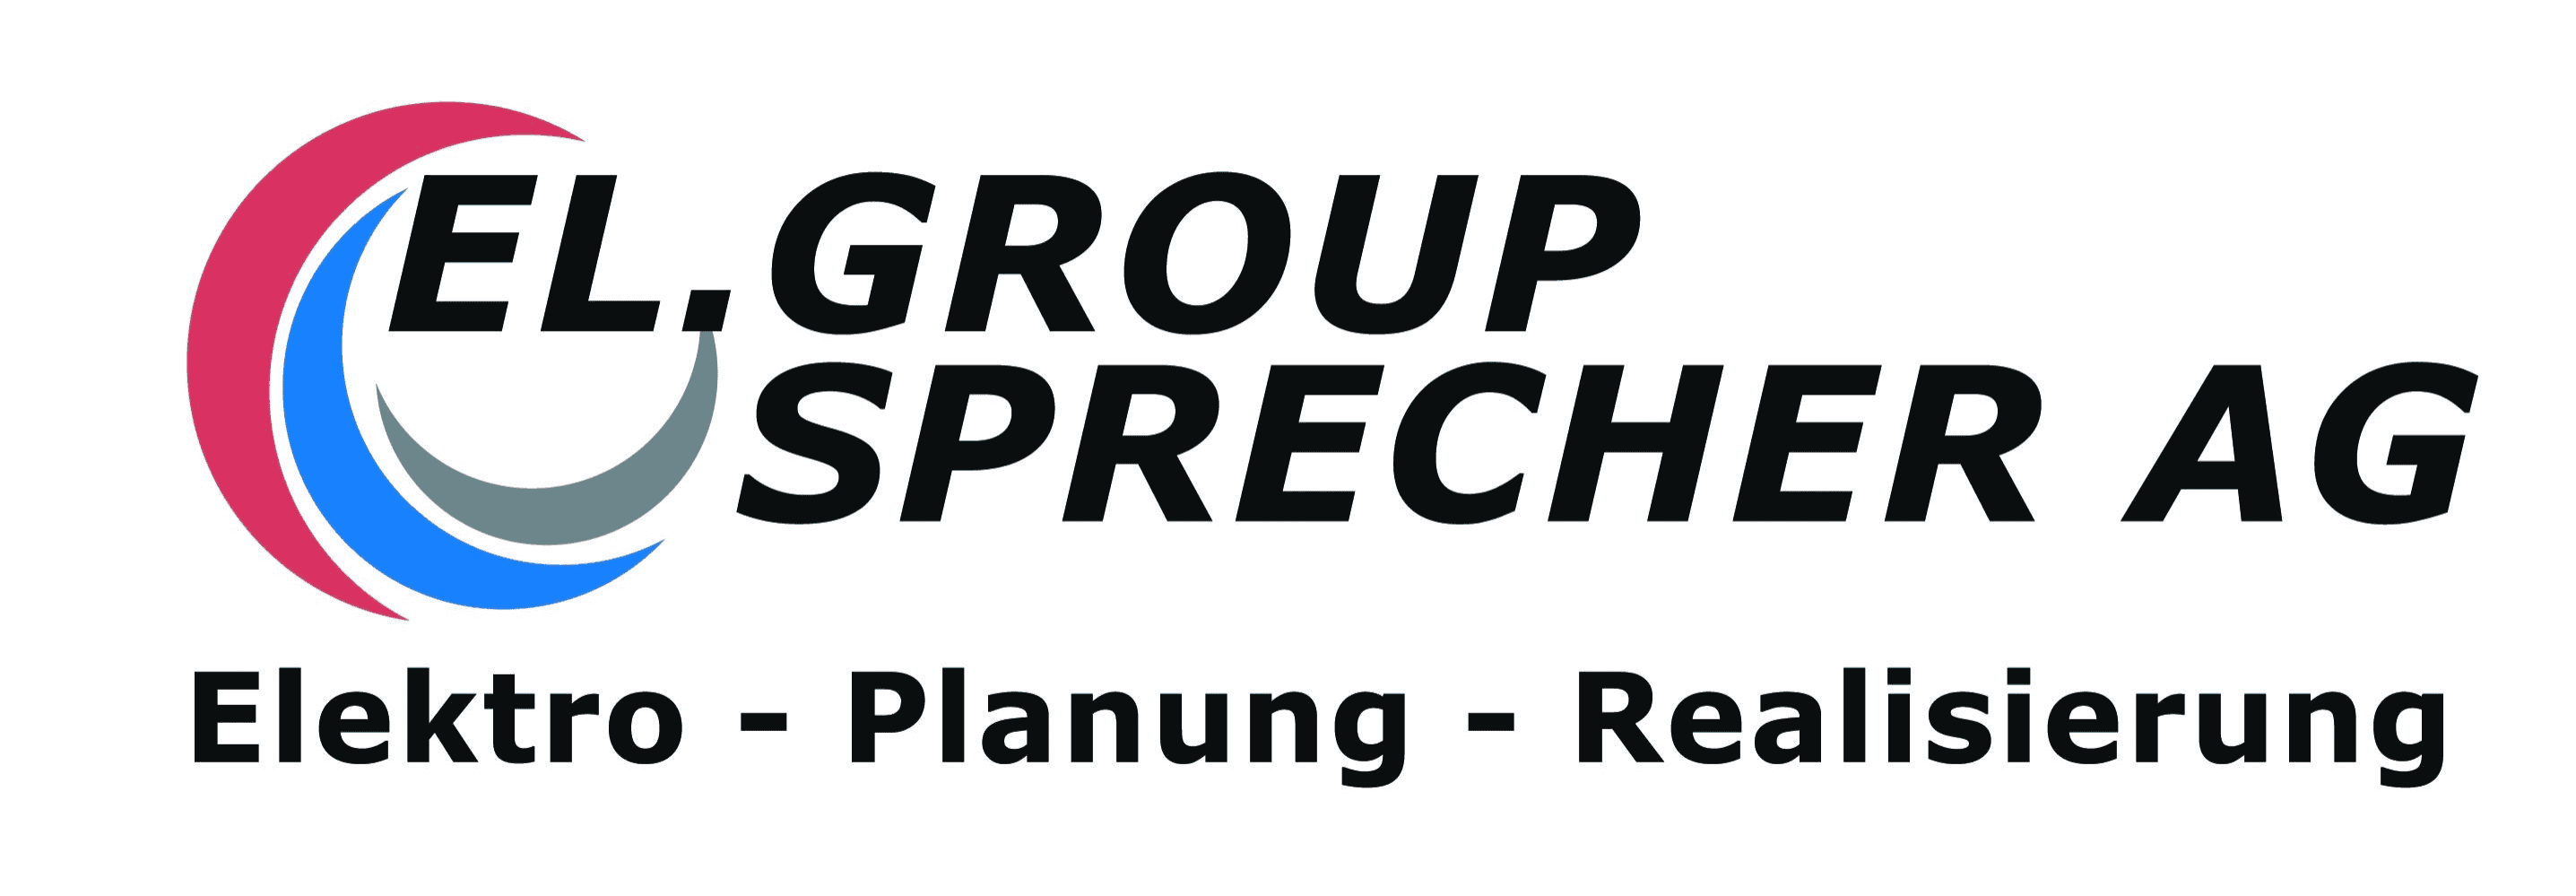 El. Group Sprecher AG